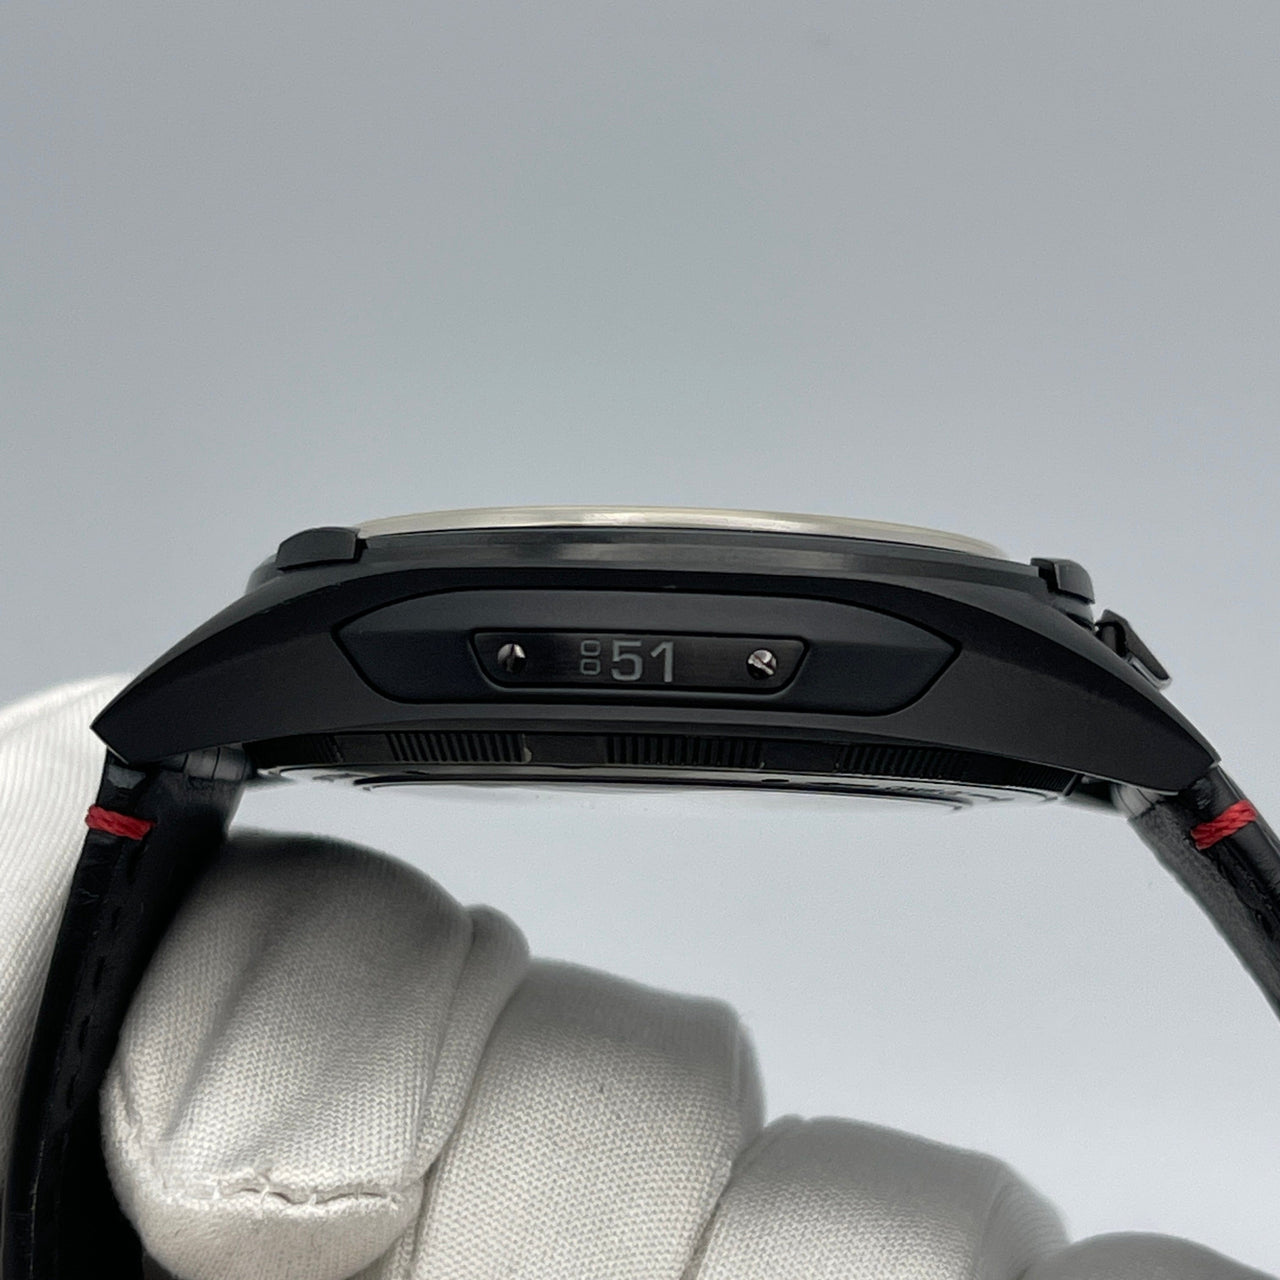 Luxury Watch Ulysse Nardin 2503-250 Black Freak Vision Titanium Wrist Aficionado